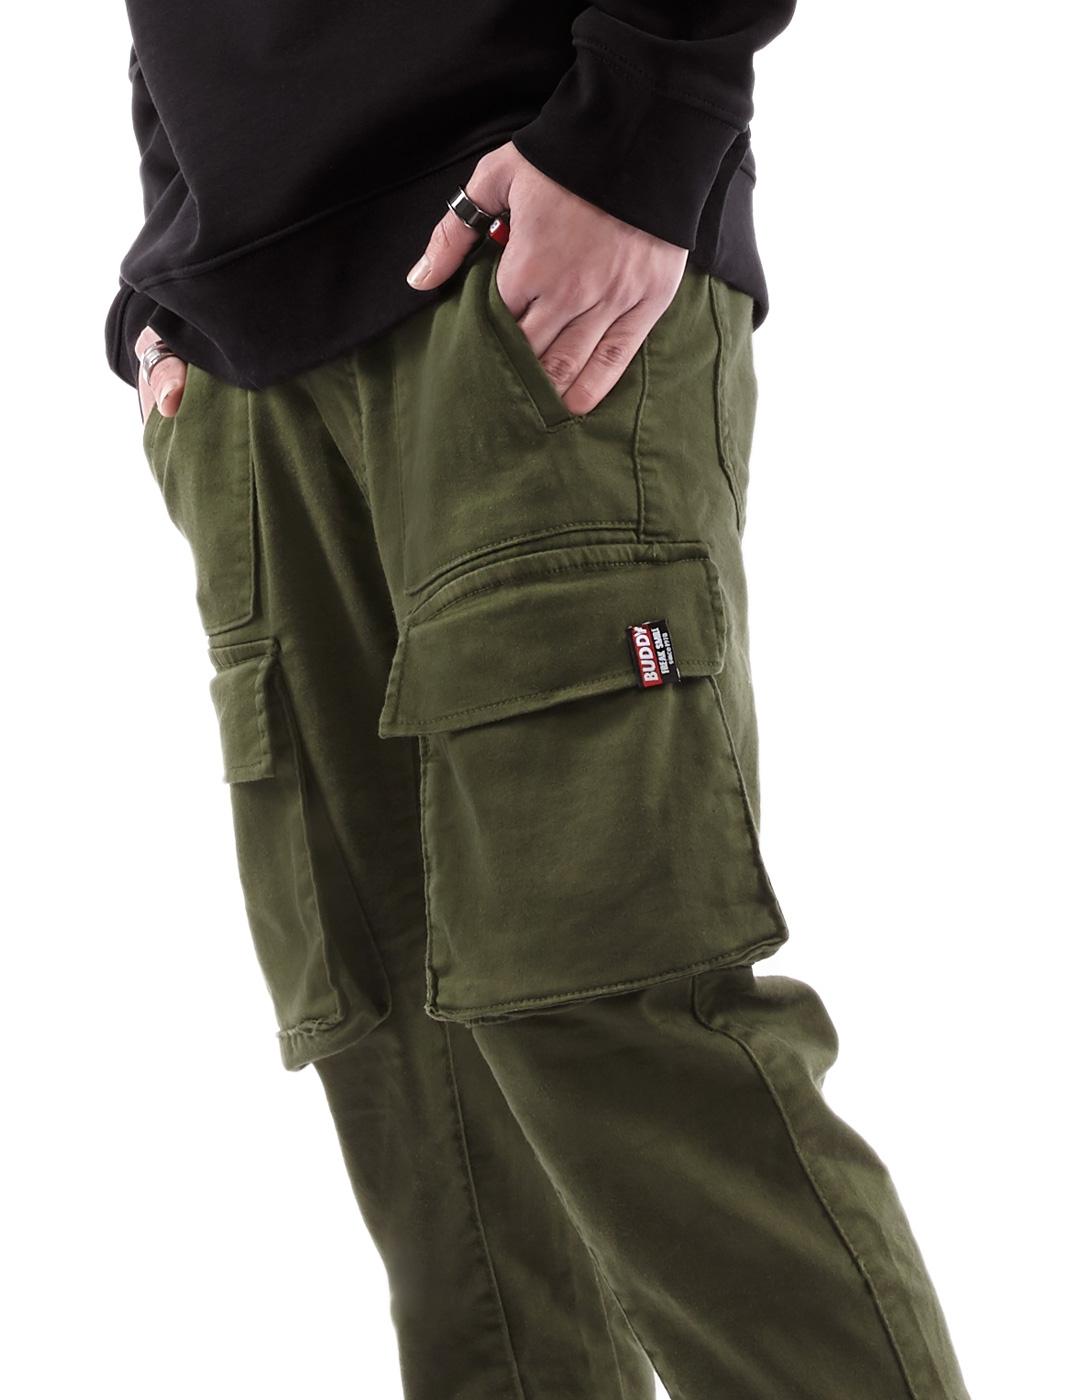 Pantalón Buddy verde militar cerrado con bolsillos